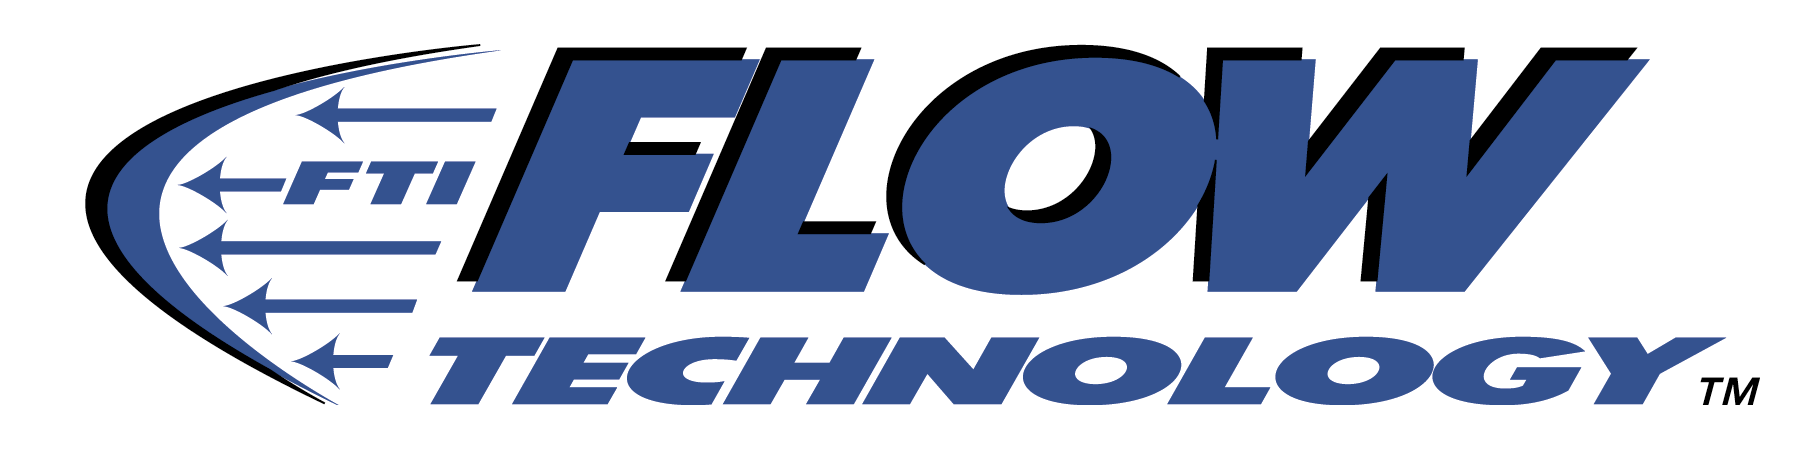 FTI Logo - FTI logo transparency - Polycontrols - Polycontrols